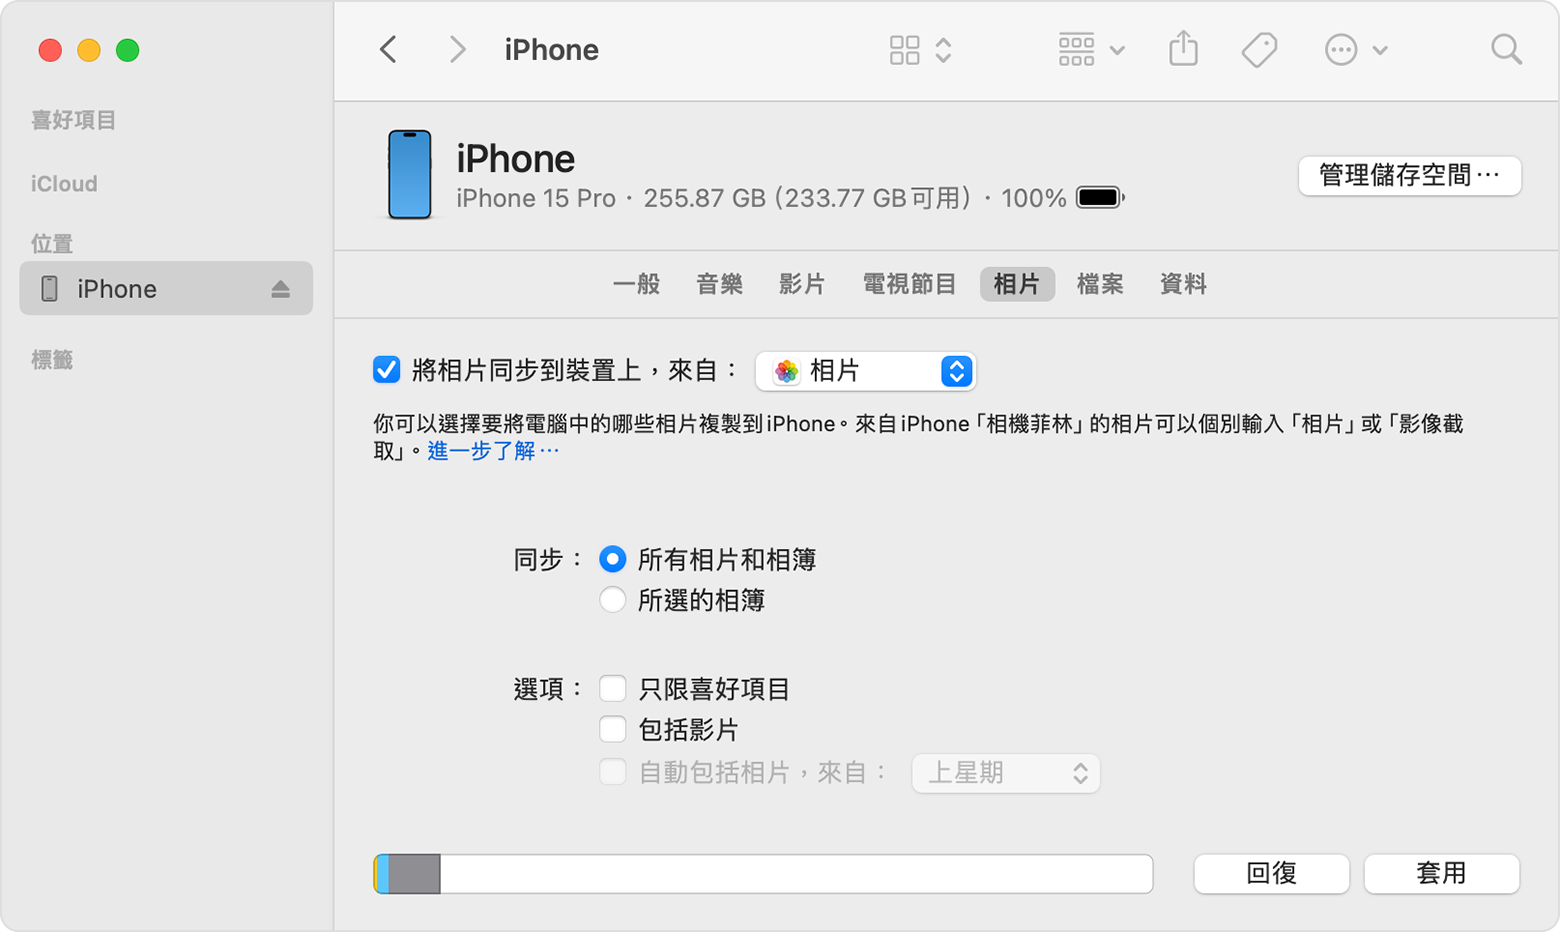 iPhone 顯示從「相片」同步相片到裝置的選項